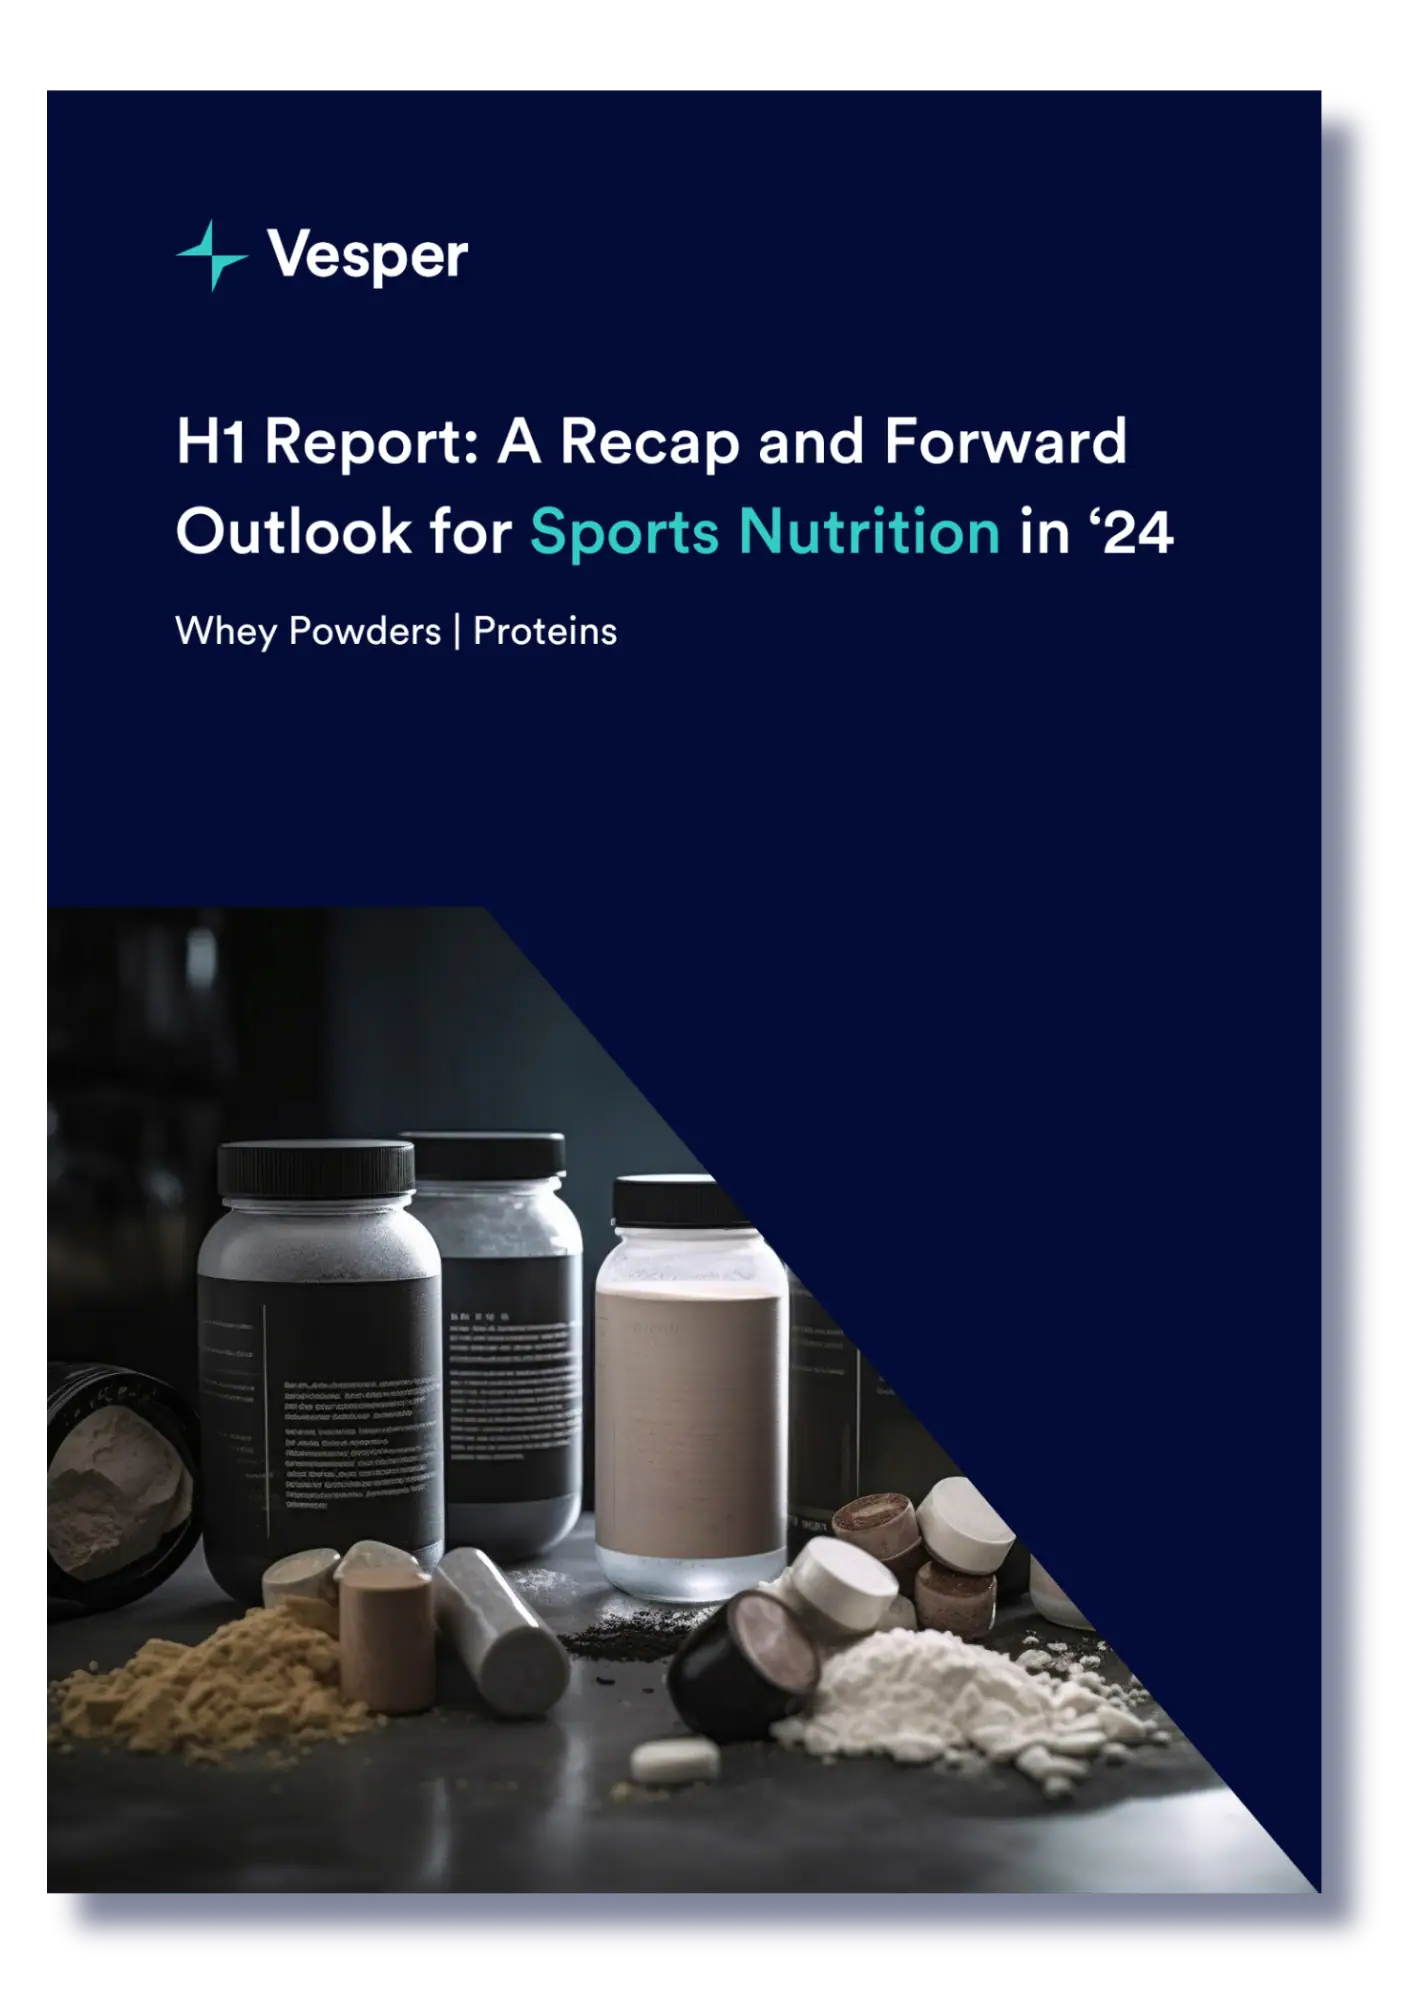 Vesper H1 Report: Sports Nutrition cover